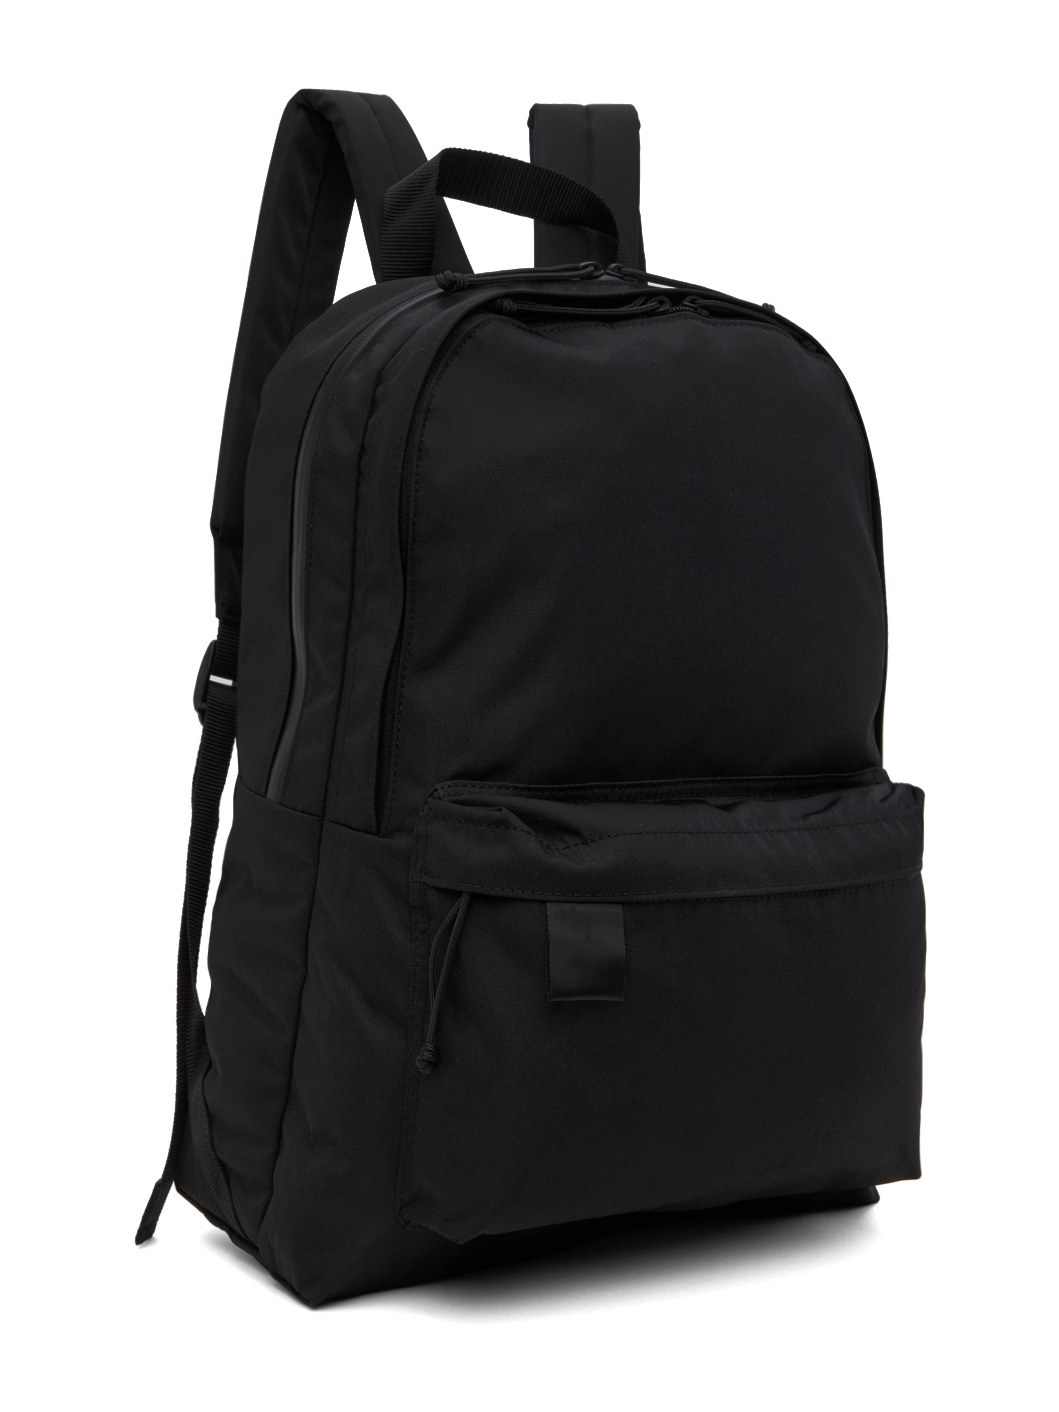 N.Hoolywood Black Small Backpack | REVERSIBLE